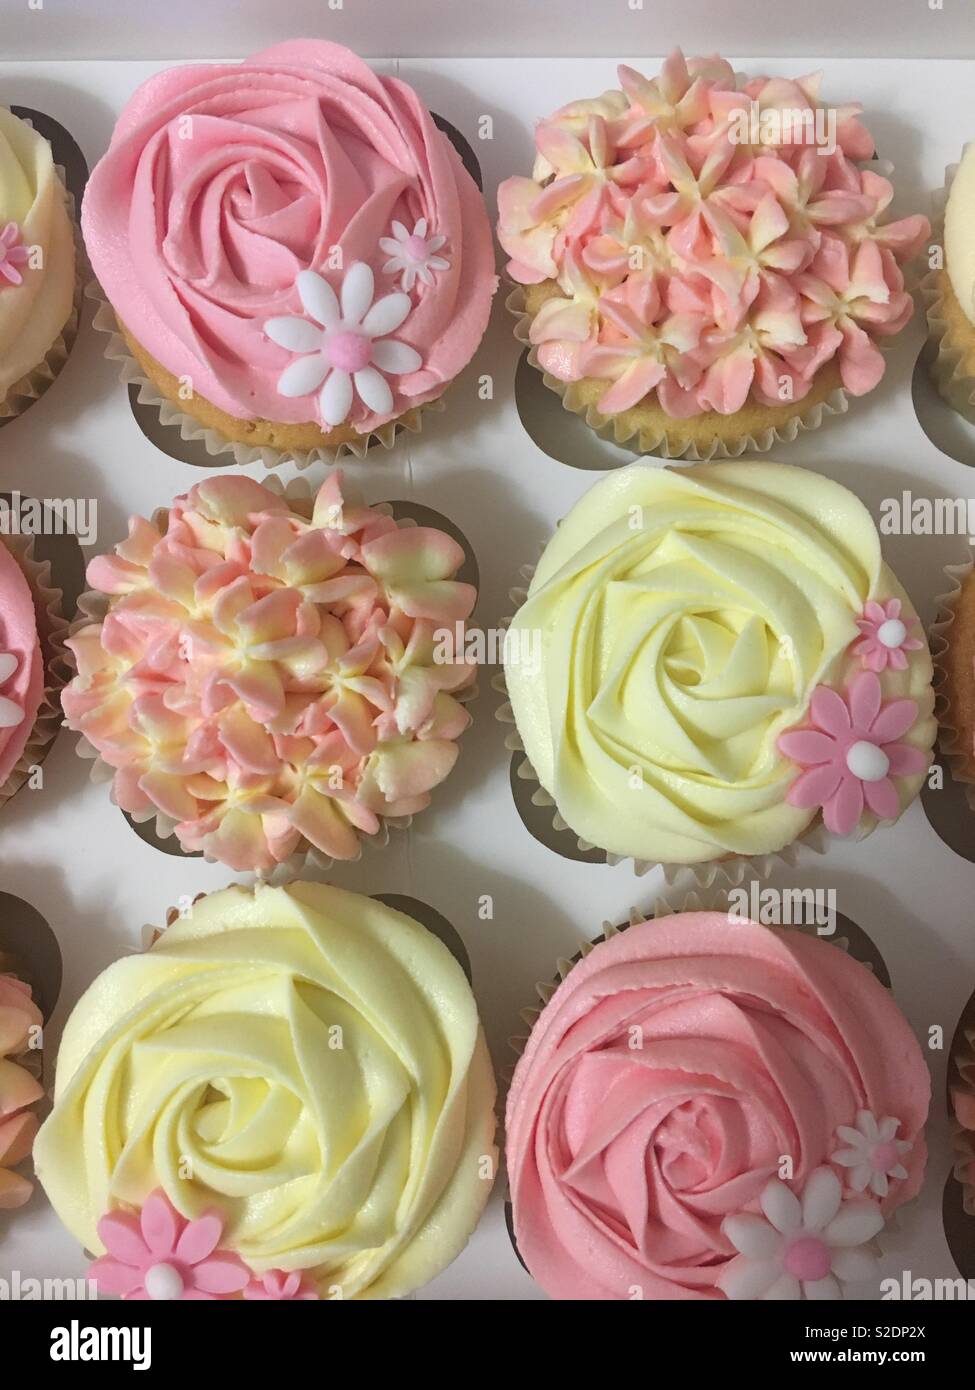 beautiful cupcakes designs